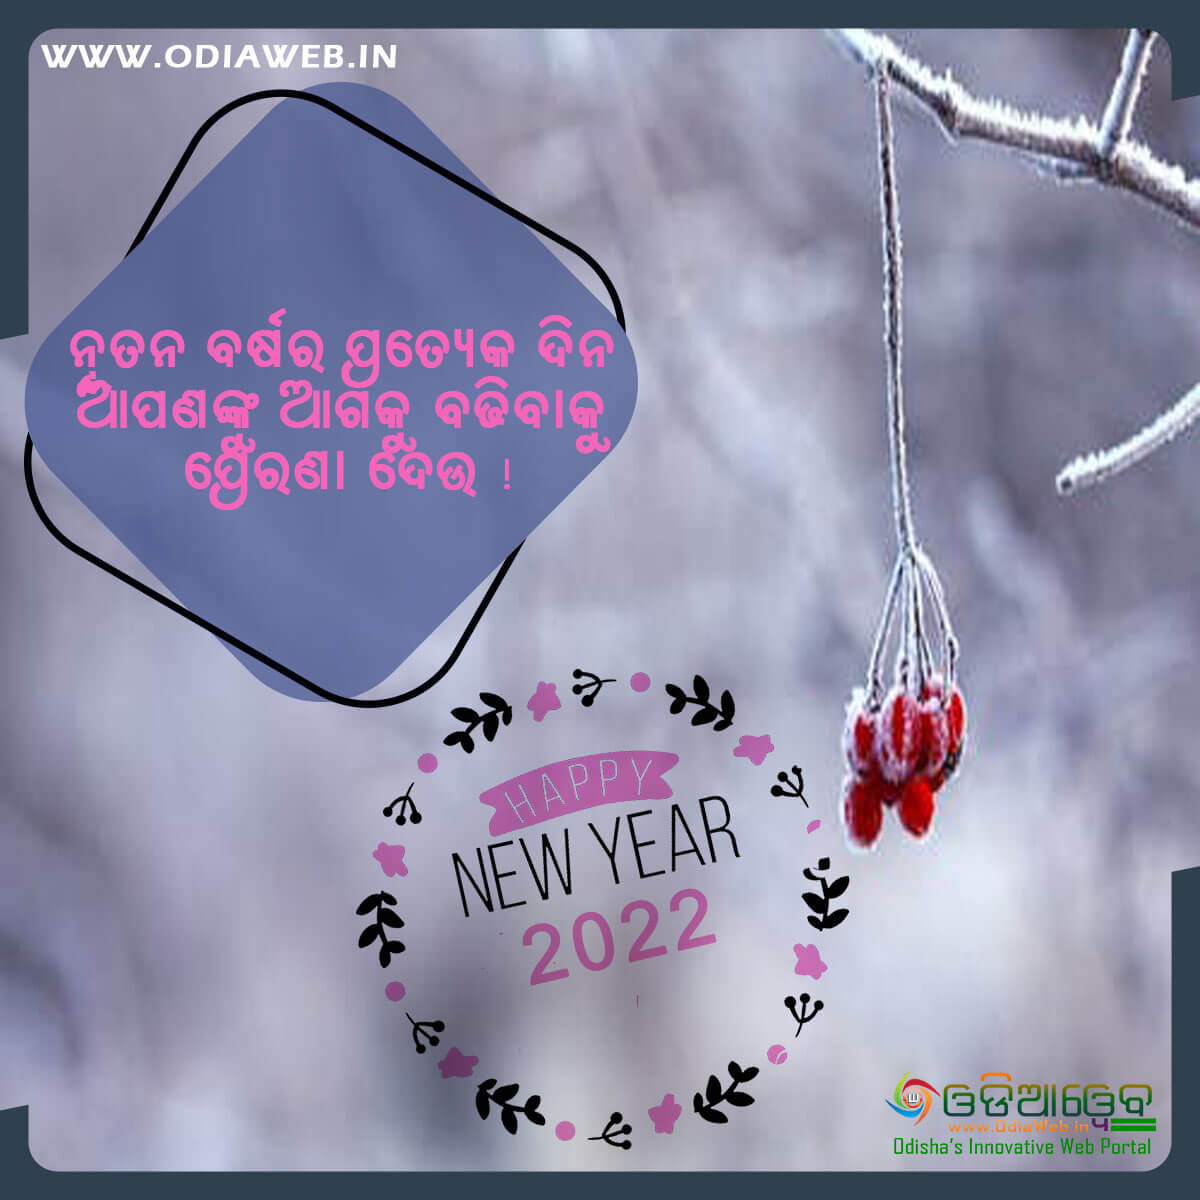 Happy New Year 2022 Wishes7 in Odia